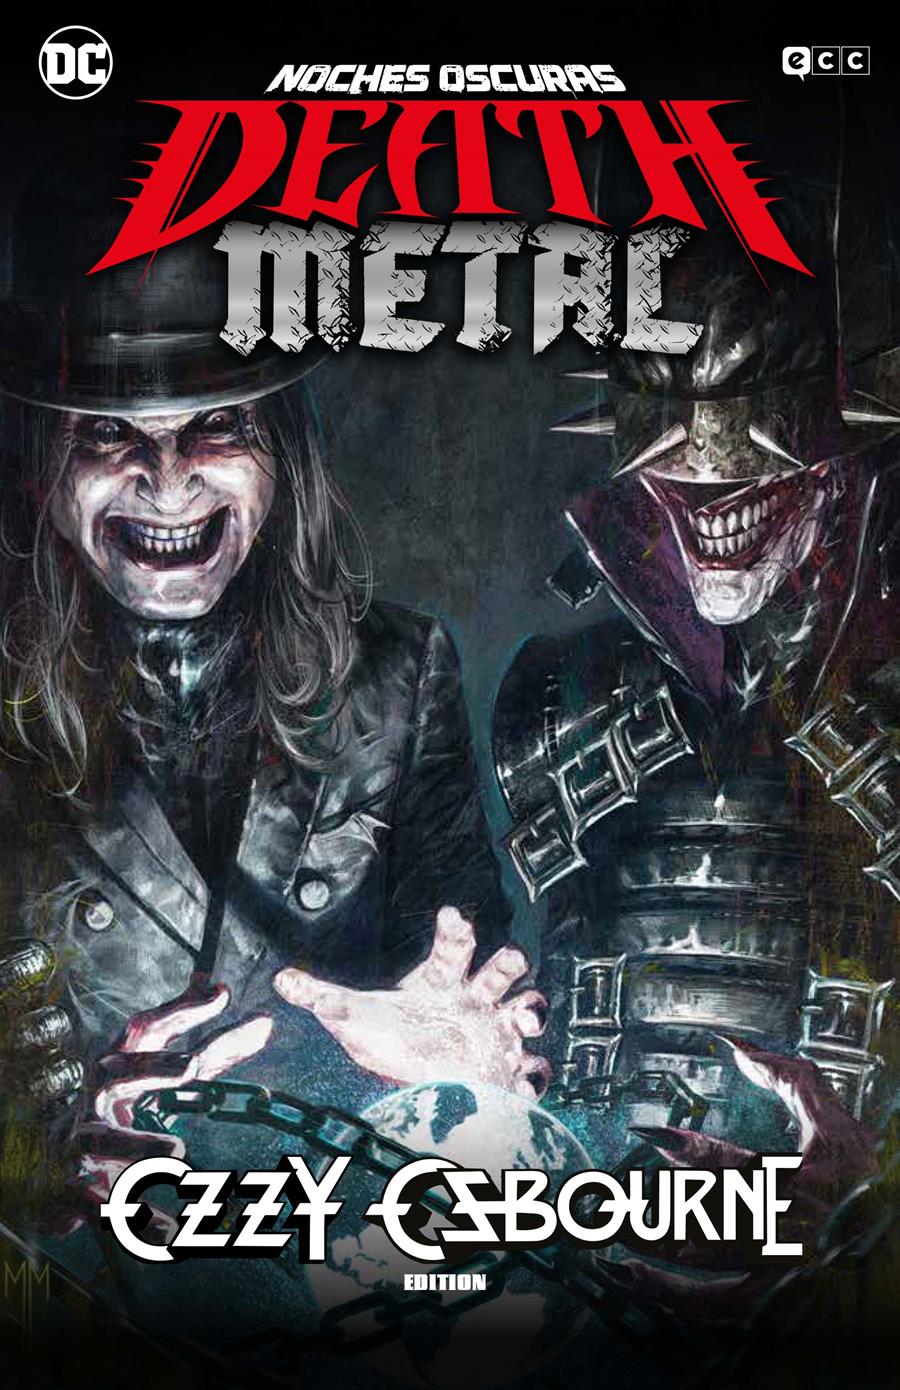 Noches oscuras: Death Metal núm. 7 (Ozzy Osbourne Band Edition) (Cartoné) | N0821-ECC21 | Greg Capullo / Scott Snyder | Terra de Còmic - Tu tienda de cómics online especializada en cómics, manga y merchandising